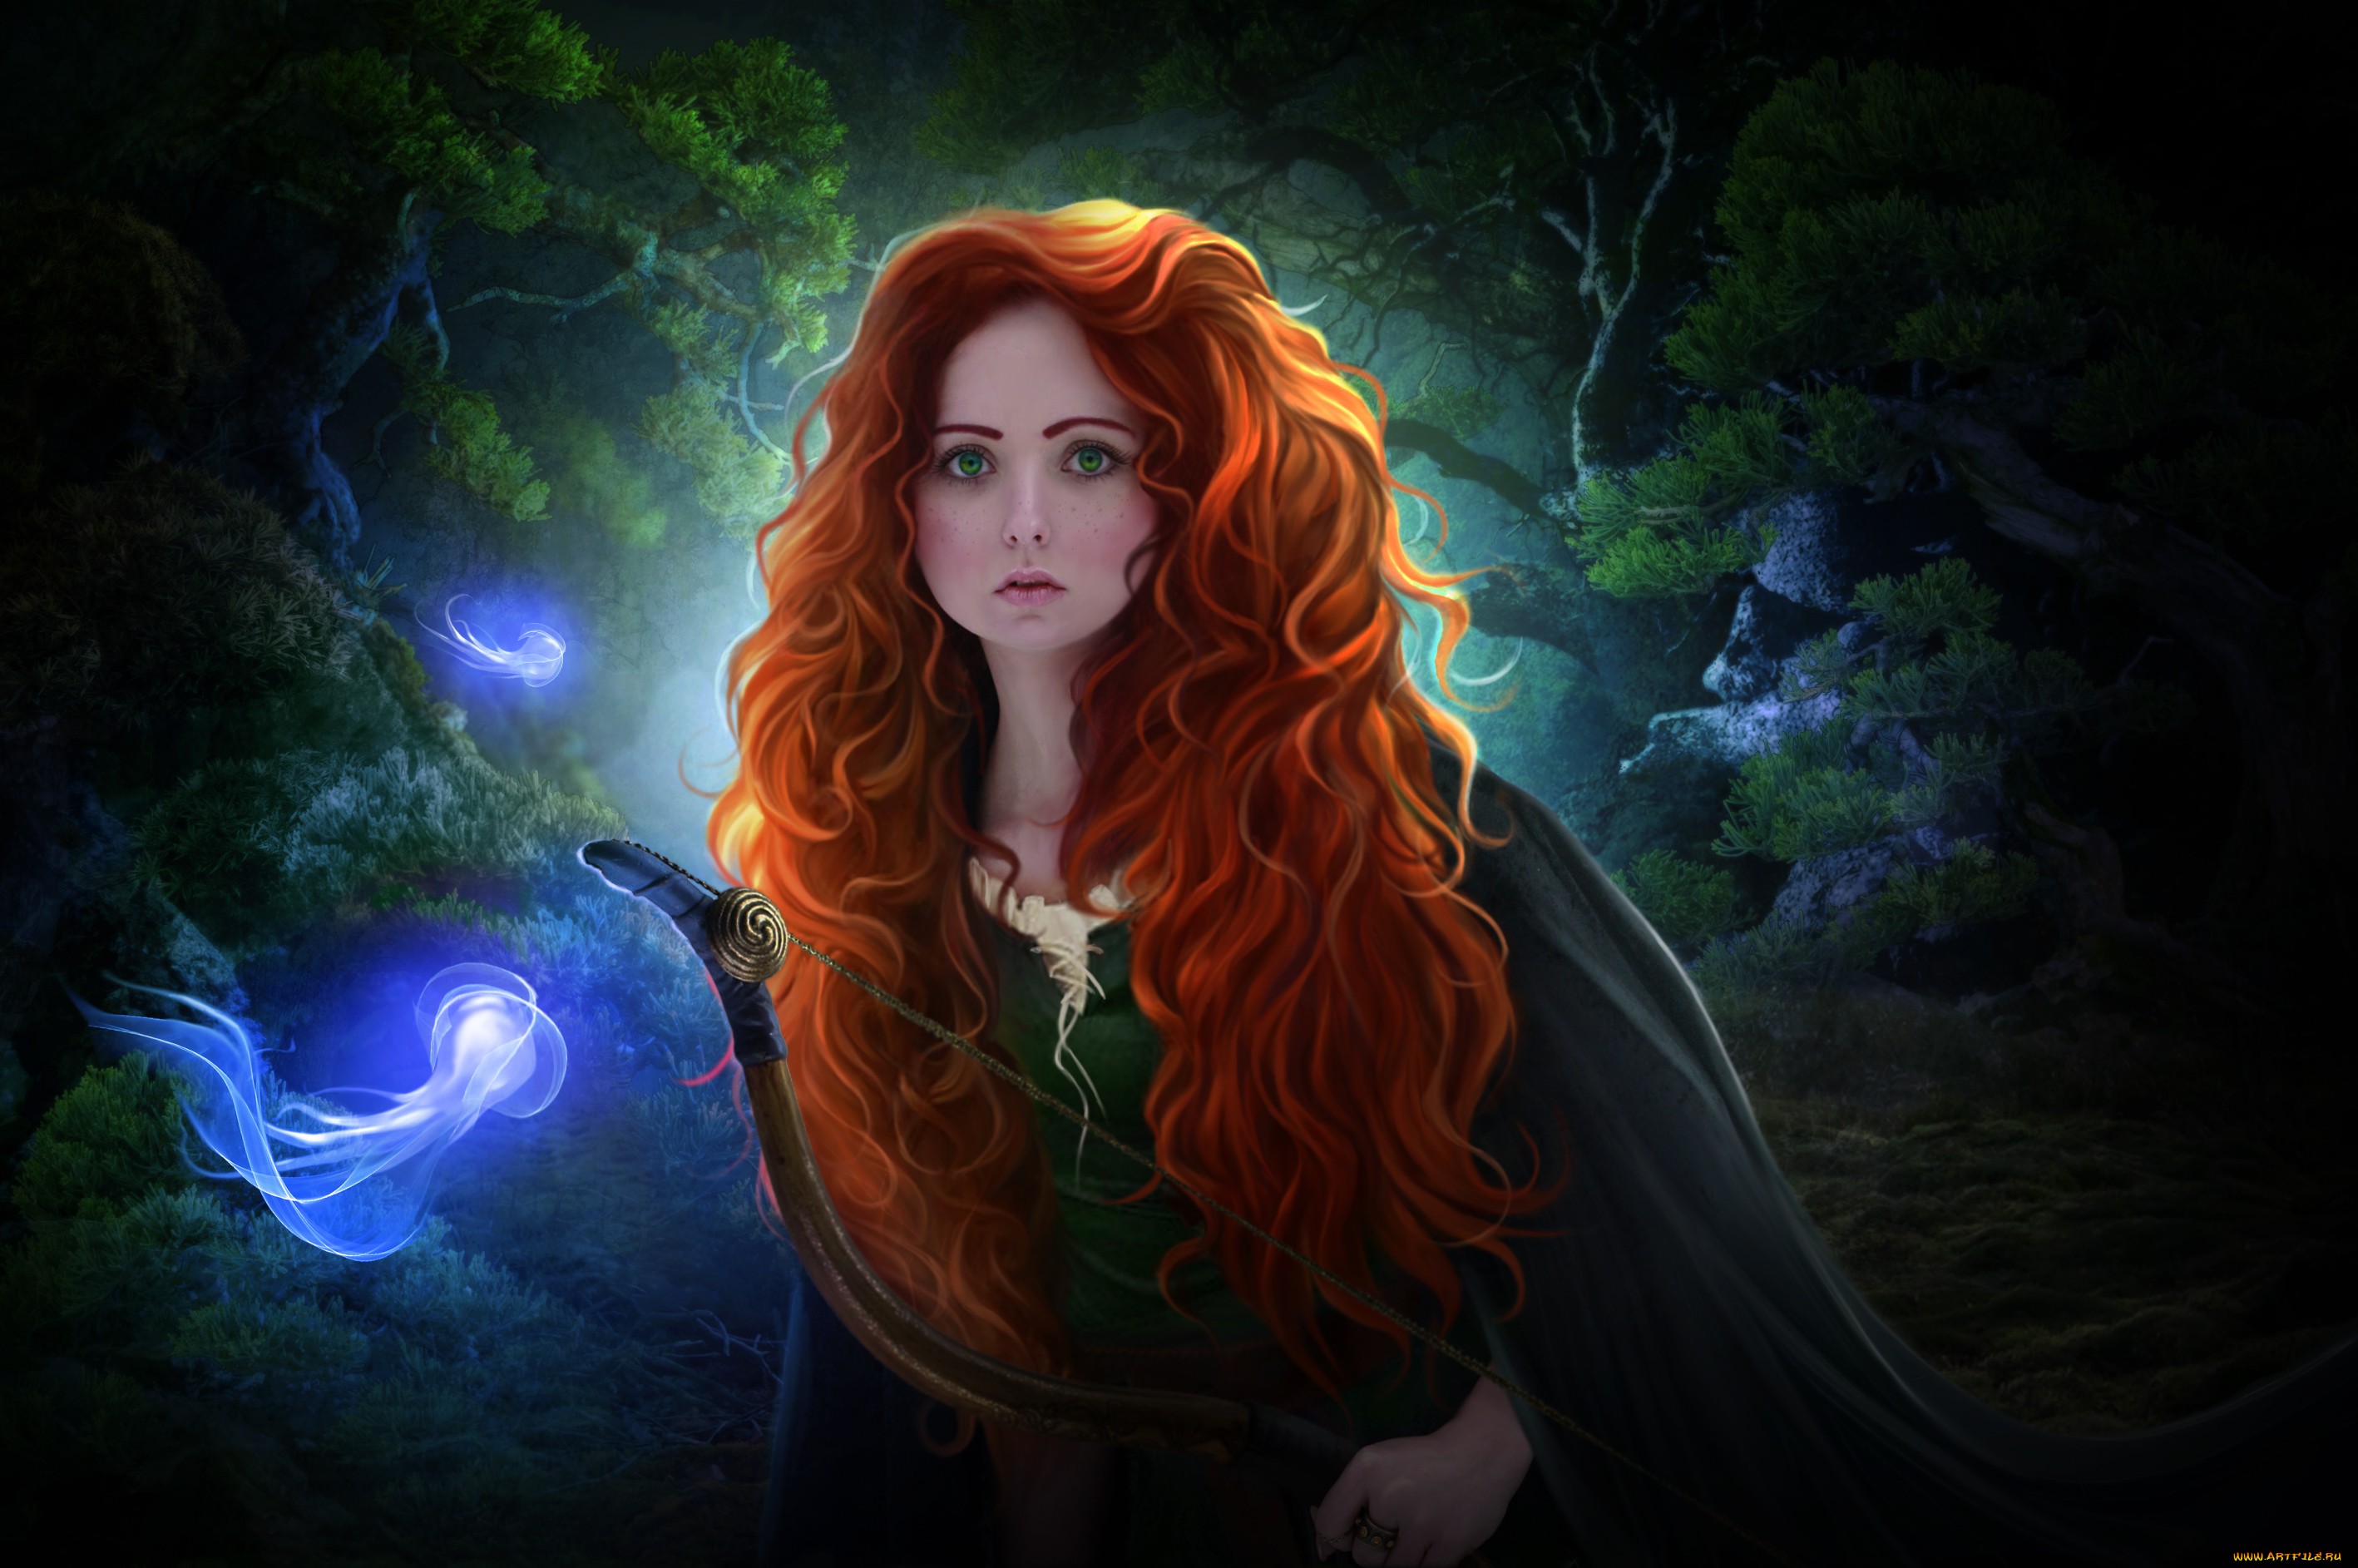 Redhead Fantasy Girl Long Hair Fantasy Art Brave Disney Princess Merida 283...